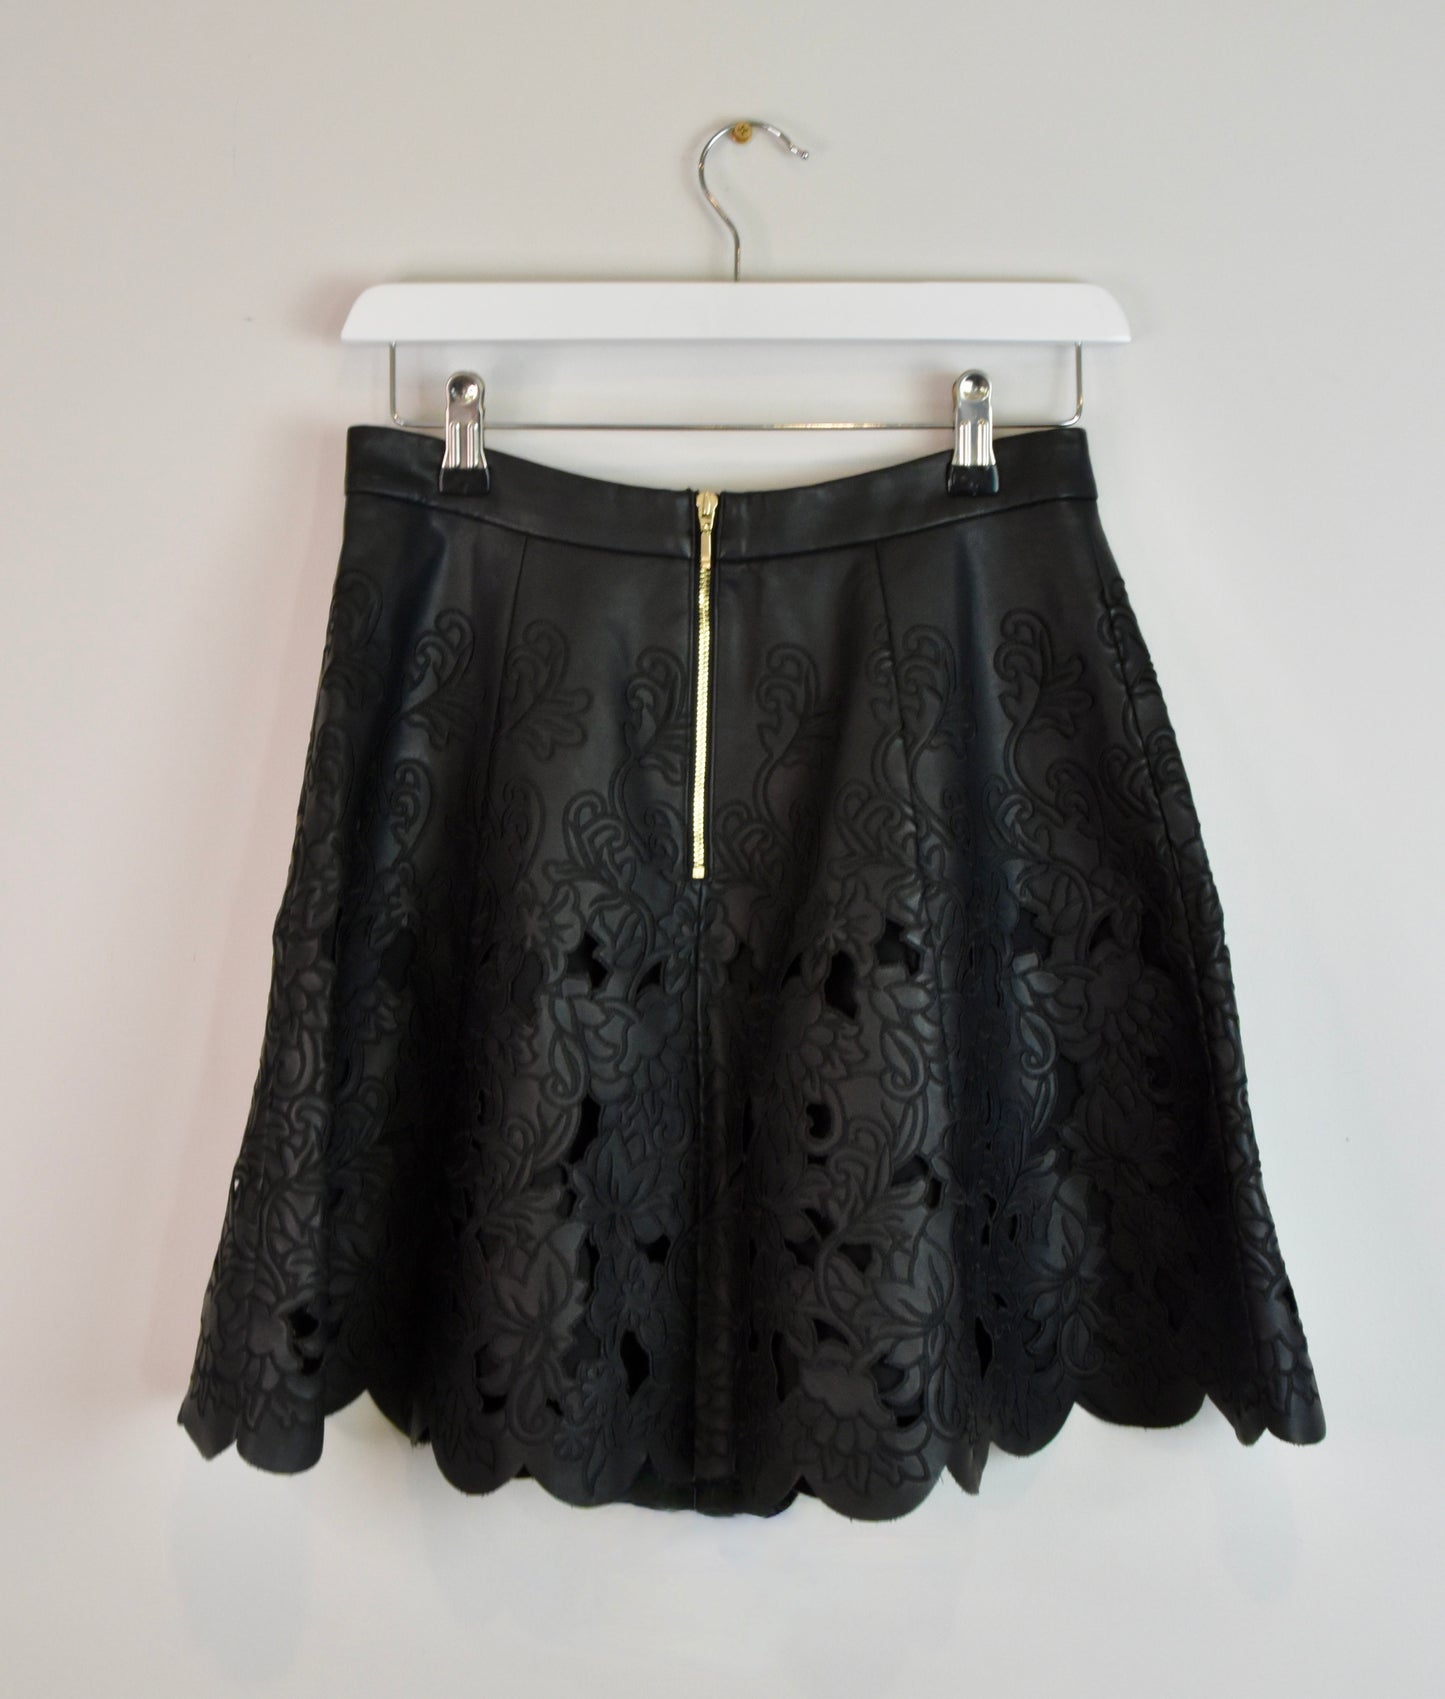 Club Monaco faux leather skirt